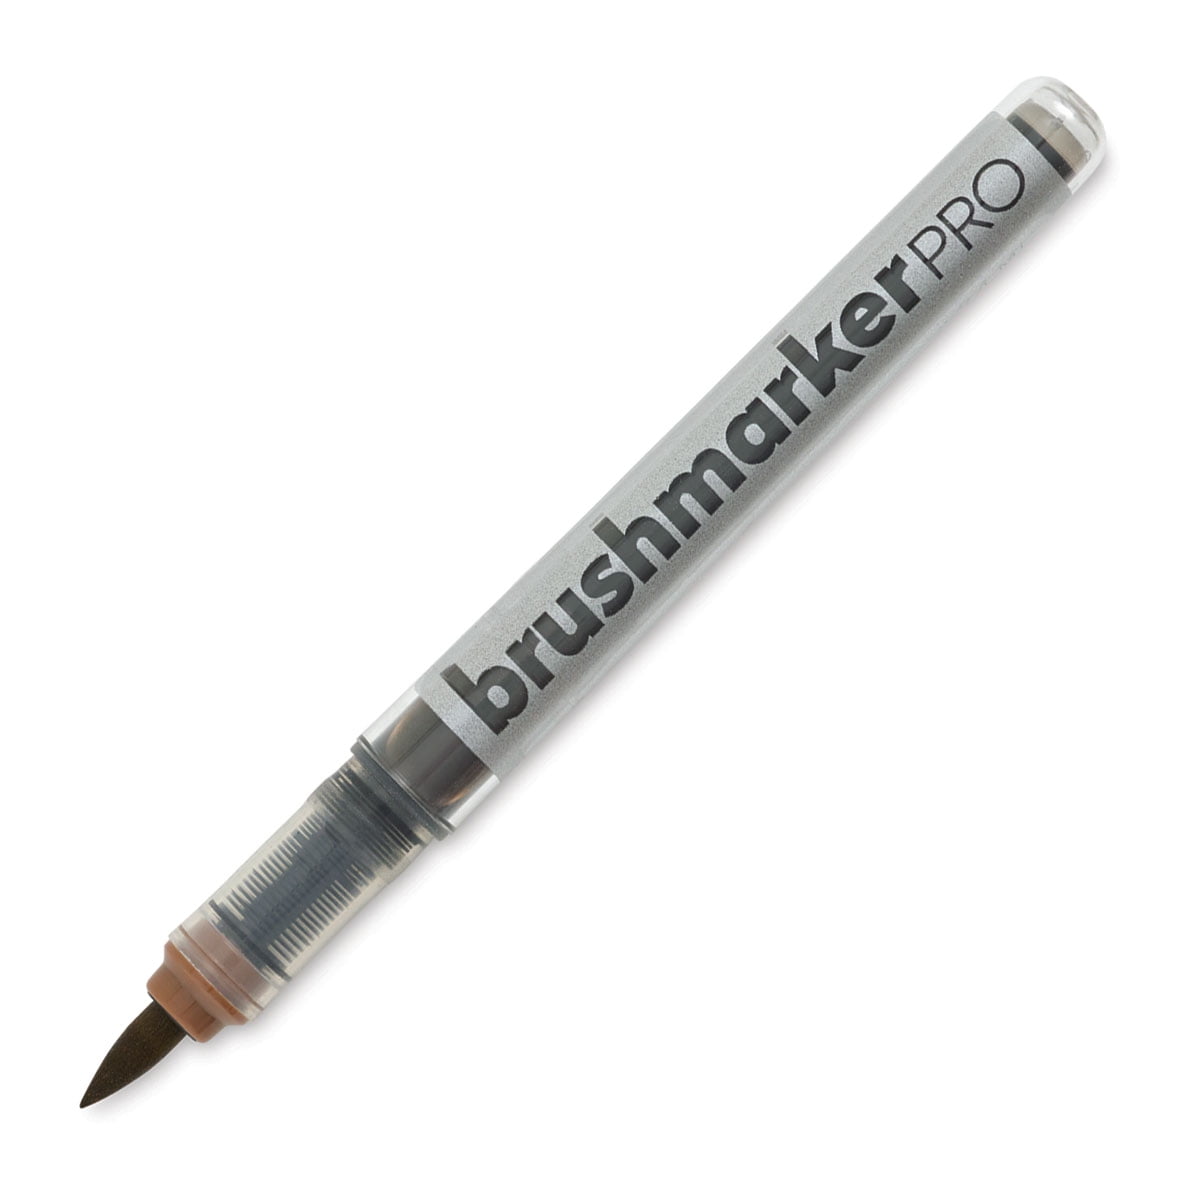 Permanent Permanent Marker Remover Pen Erasing Pen Occurs The For